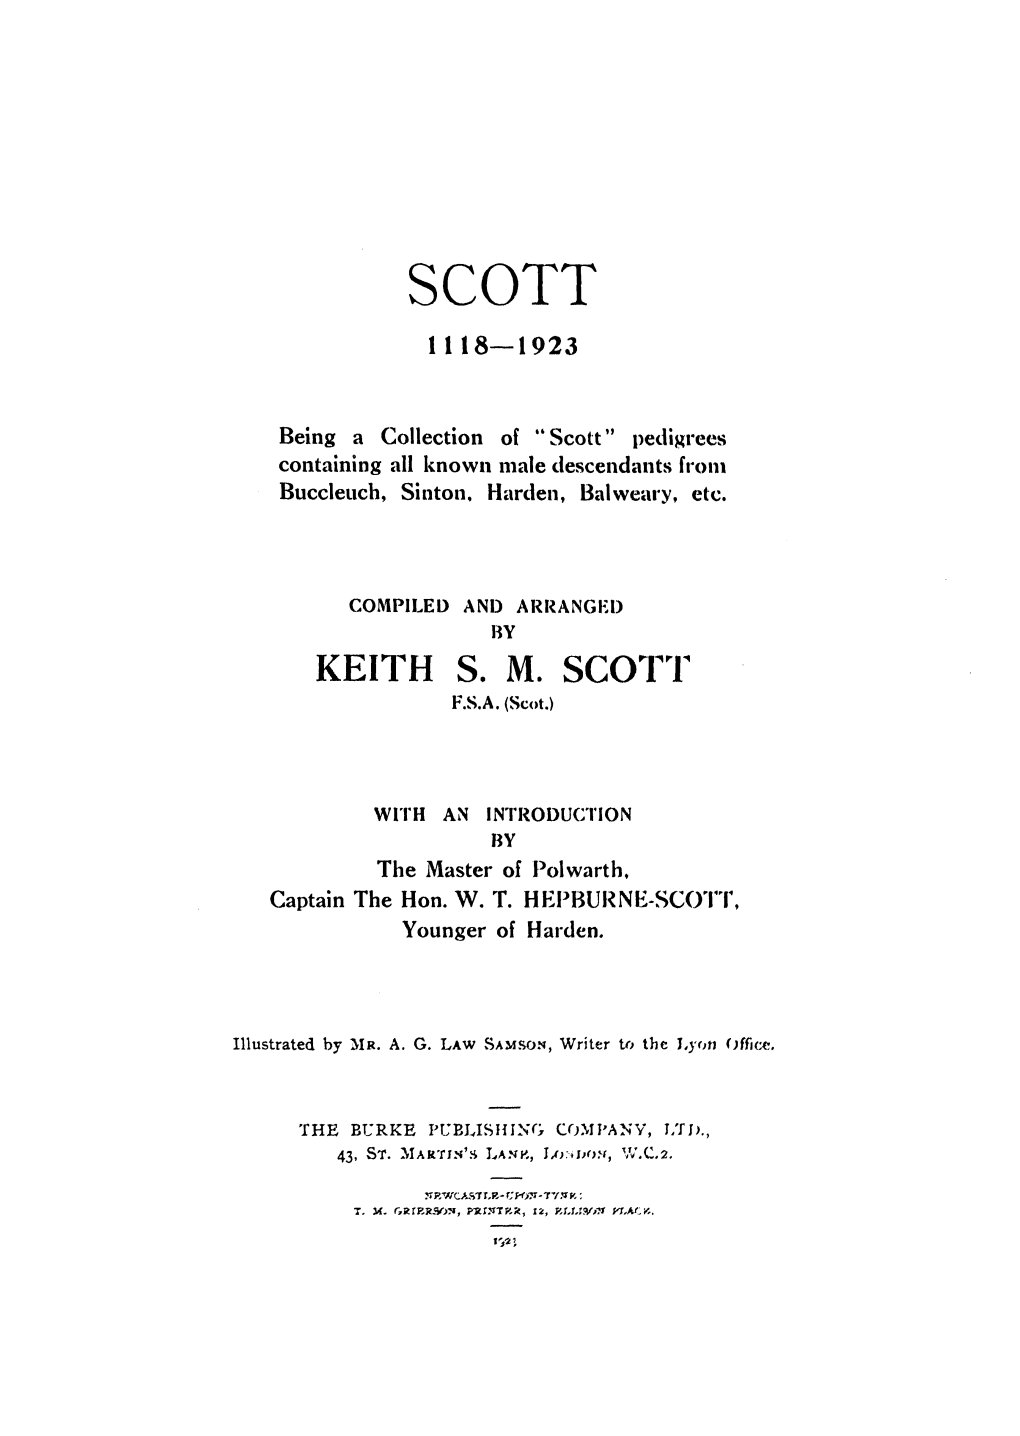 Walter Scott. 247